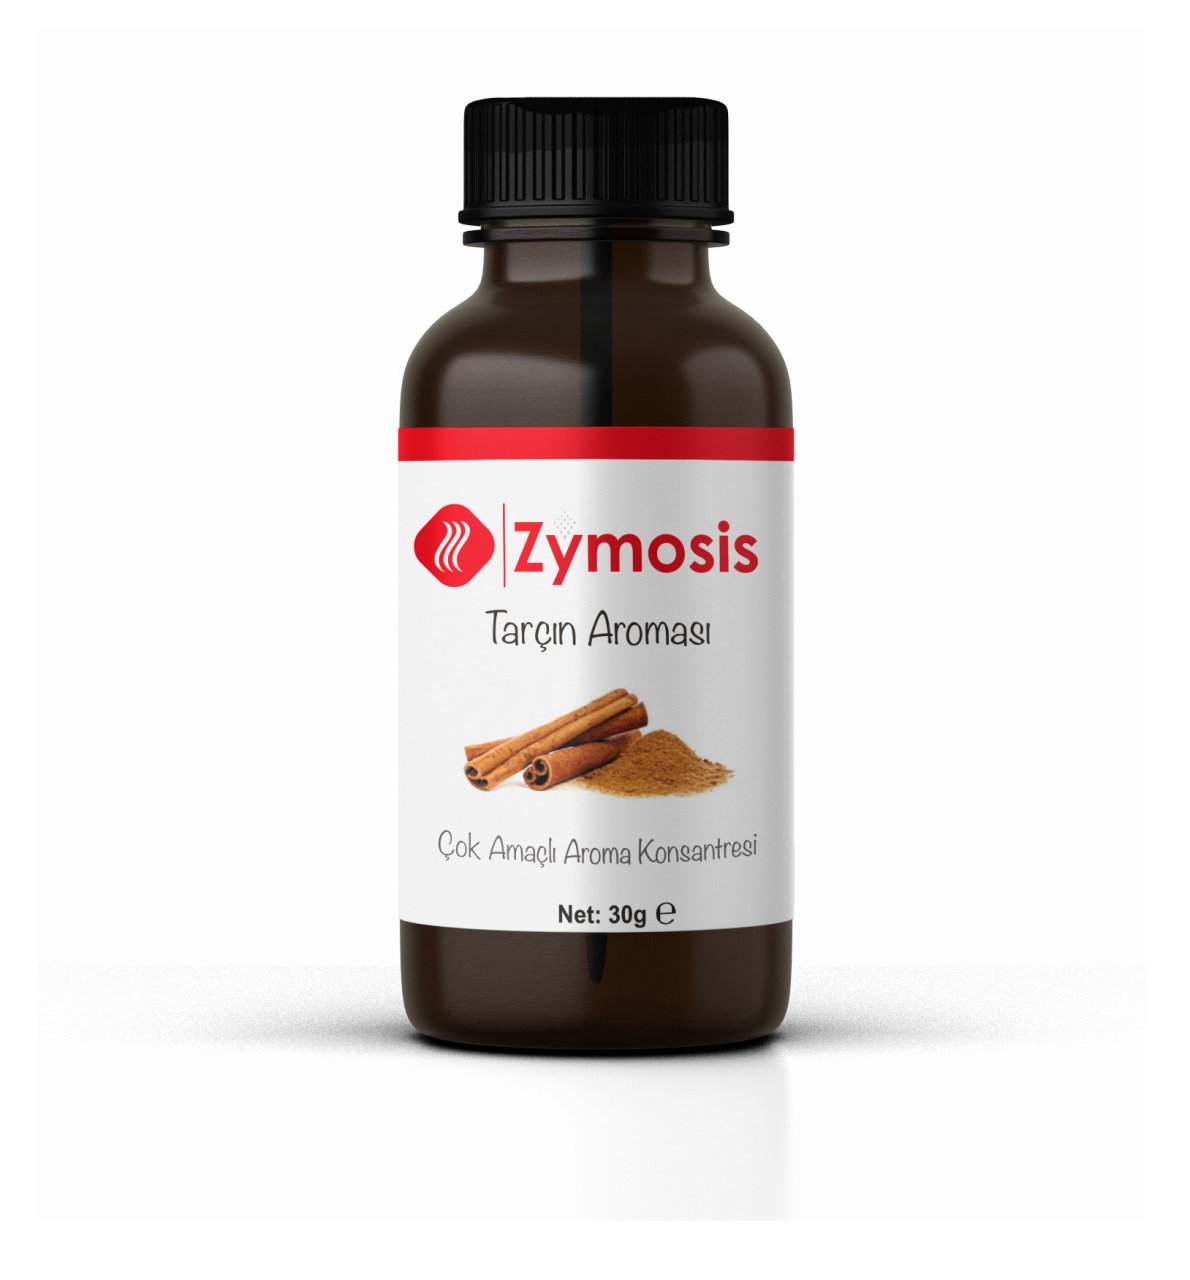 Zymosis Tarçın Aroması